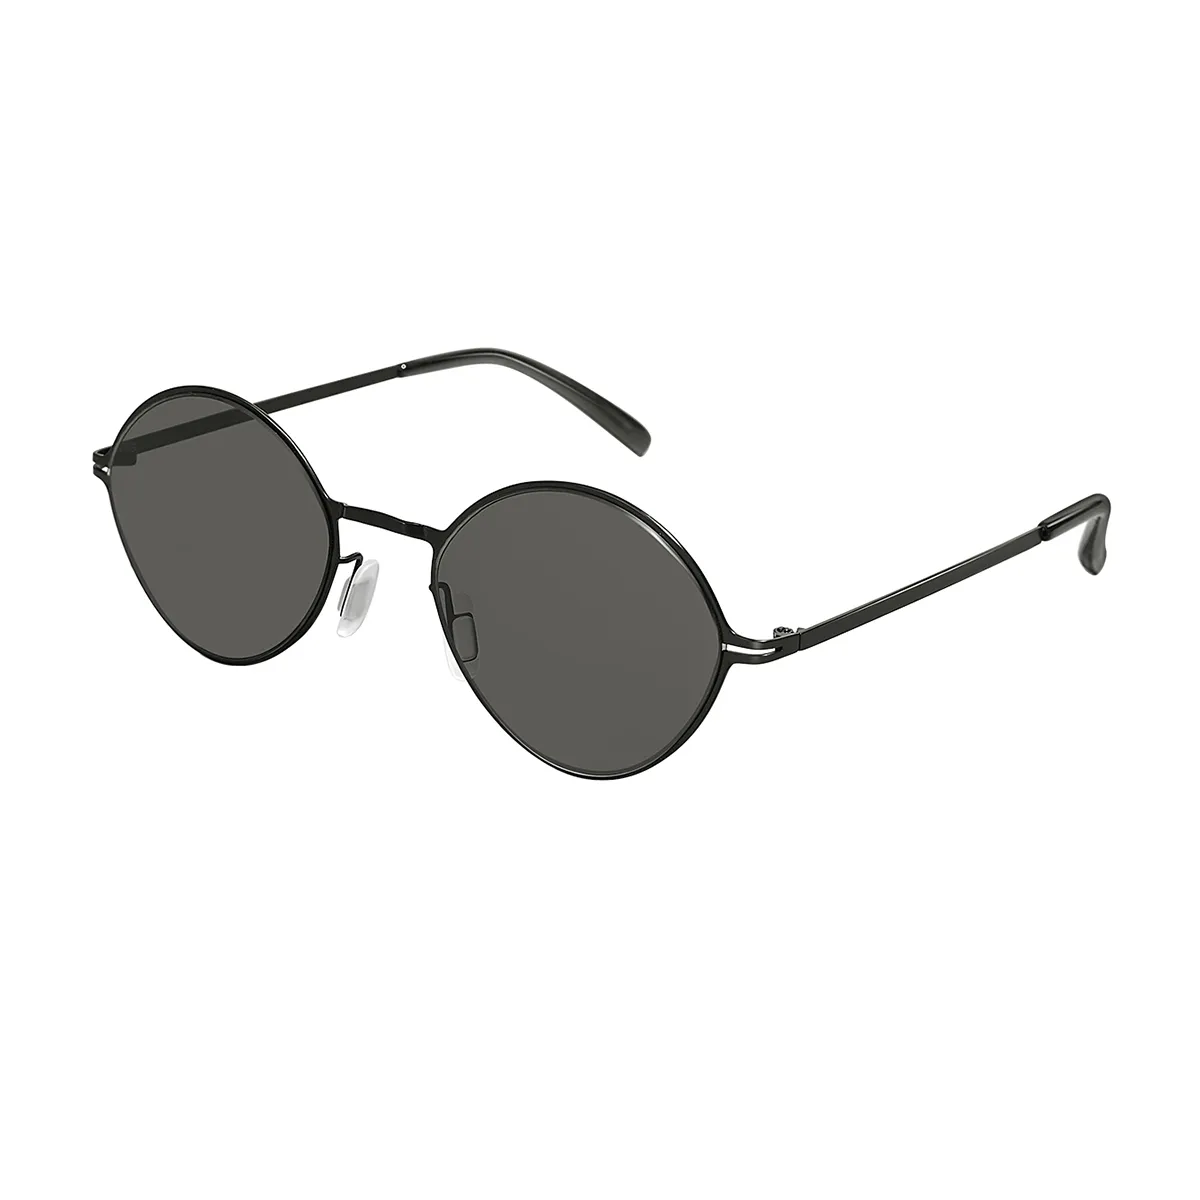 Bergen - Oval Black Sunglasses for Women